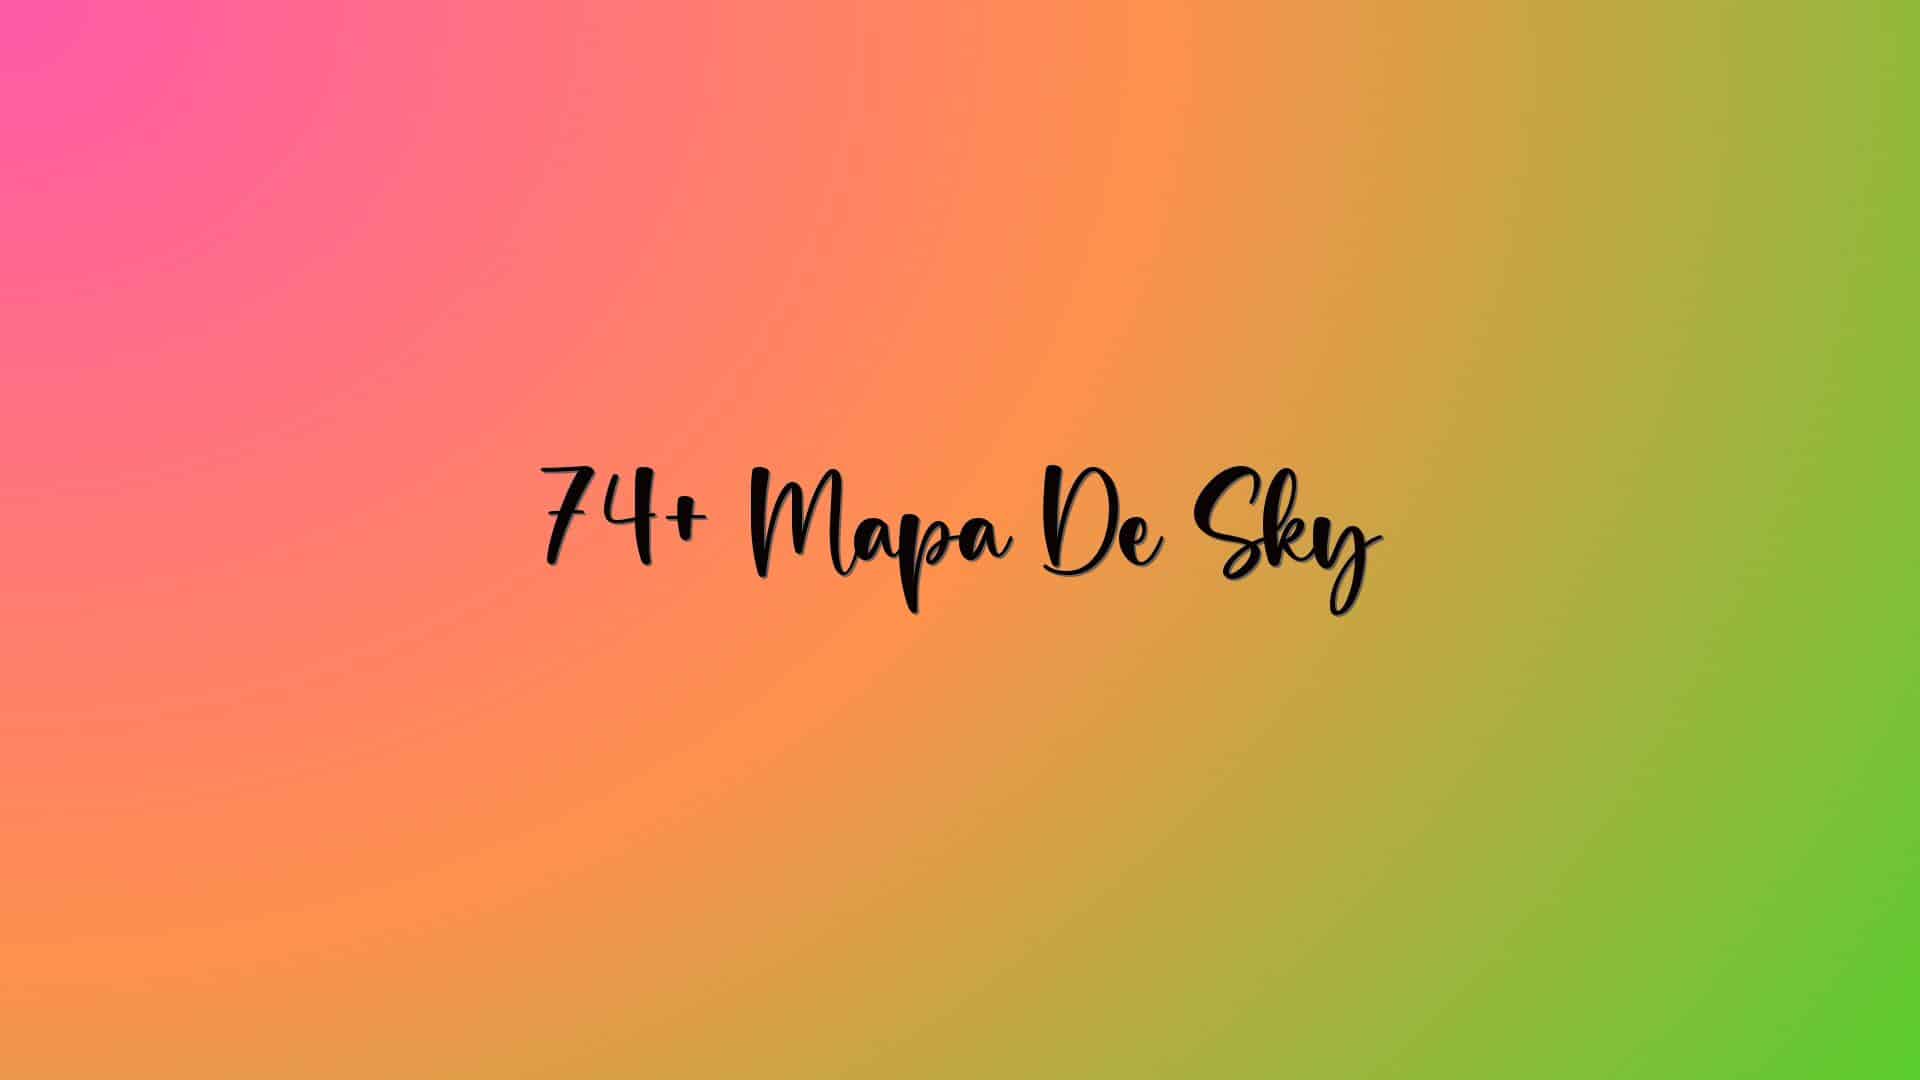 74+ Mapa De Sky